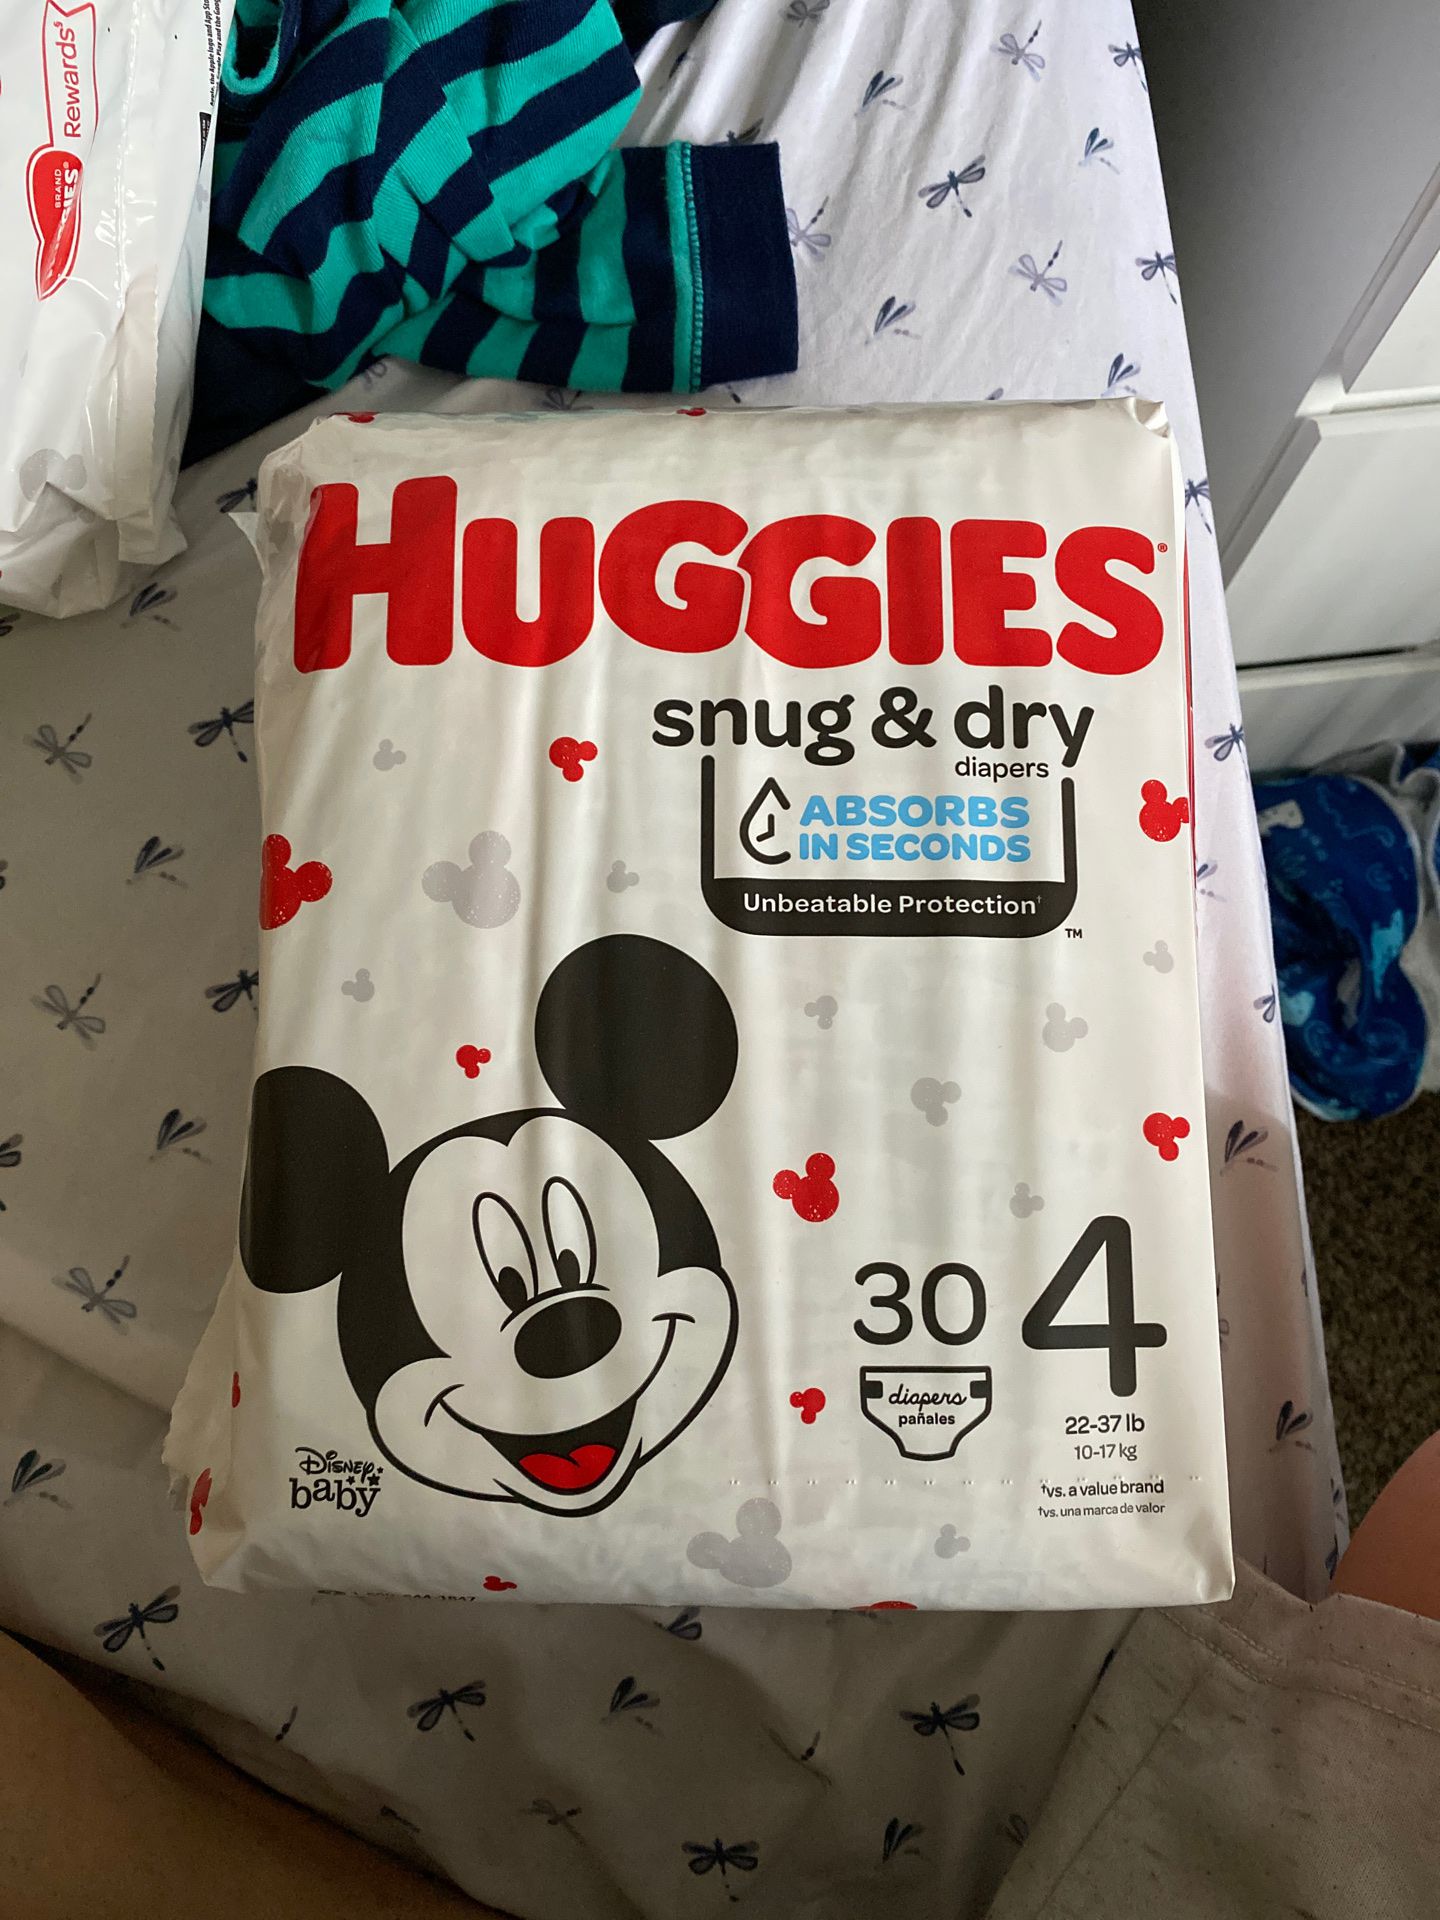 Huggies snug & dry size 4